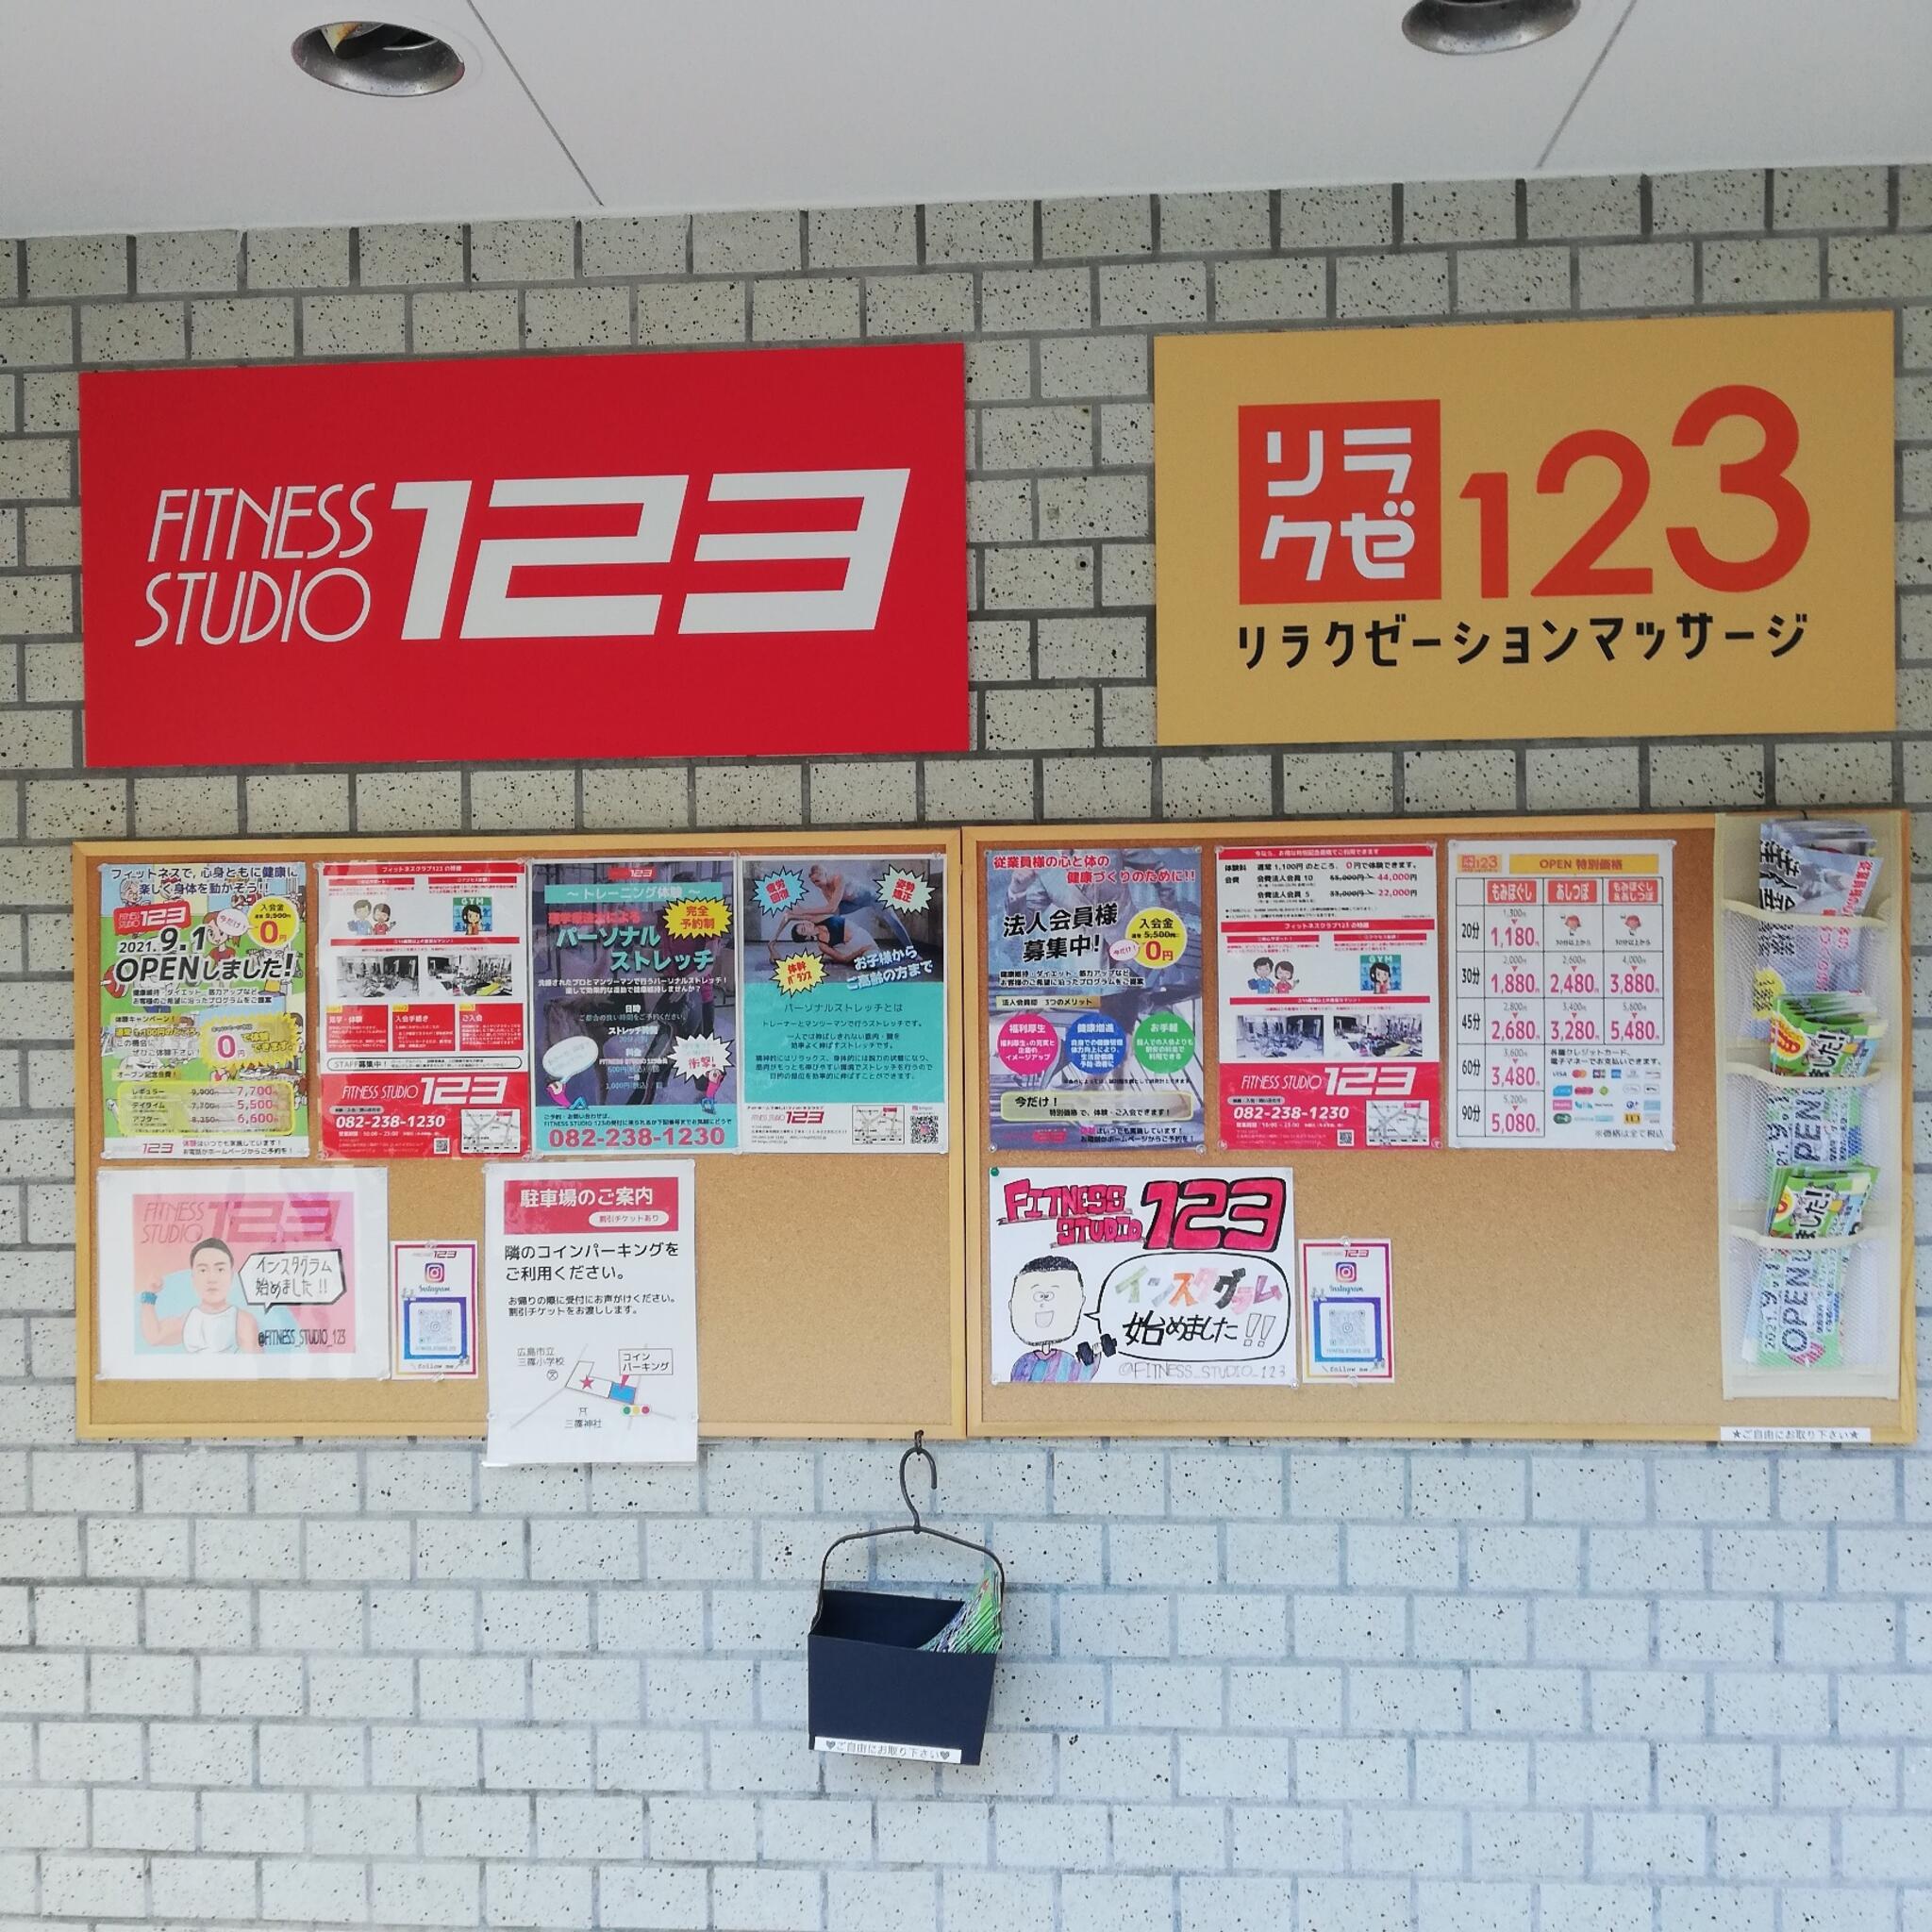 FITNESS STUDIO 123 広島横川店の代表写真8